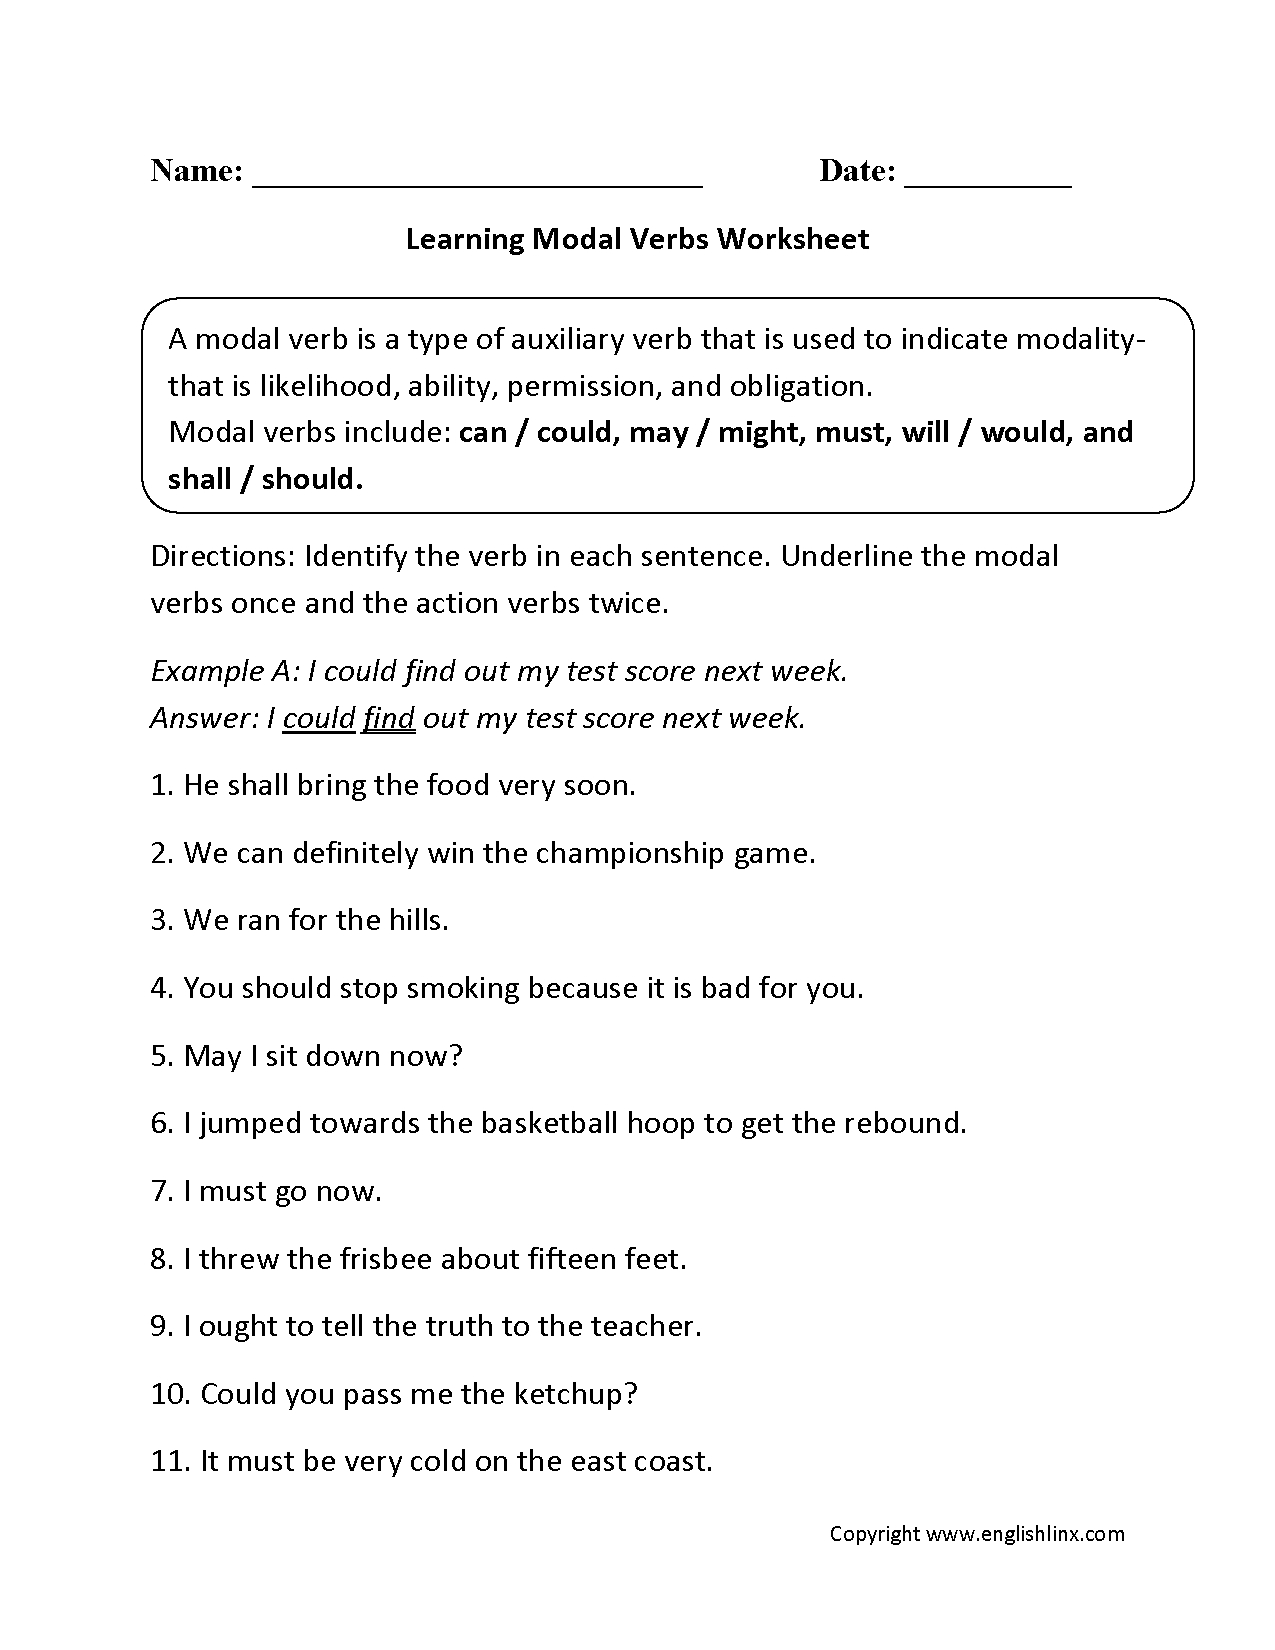 exercise about modal verbs